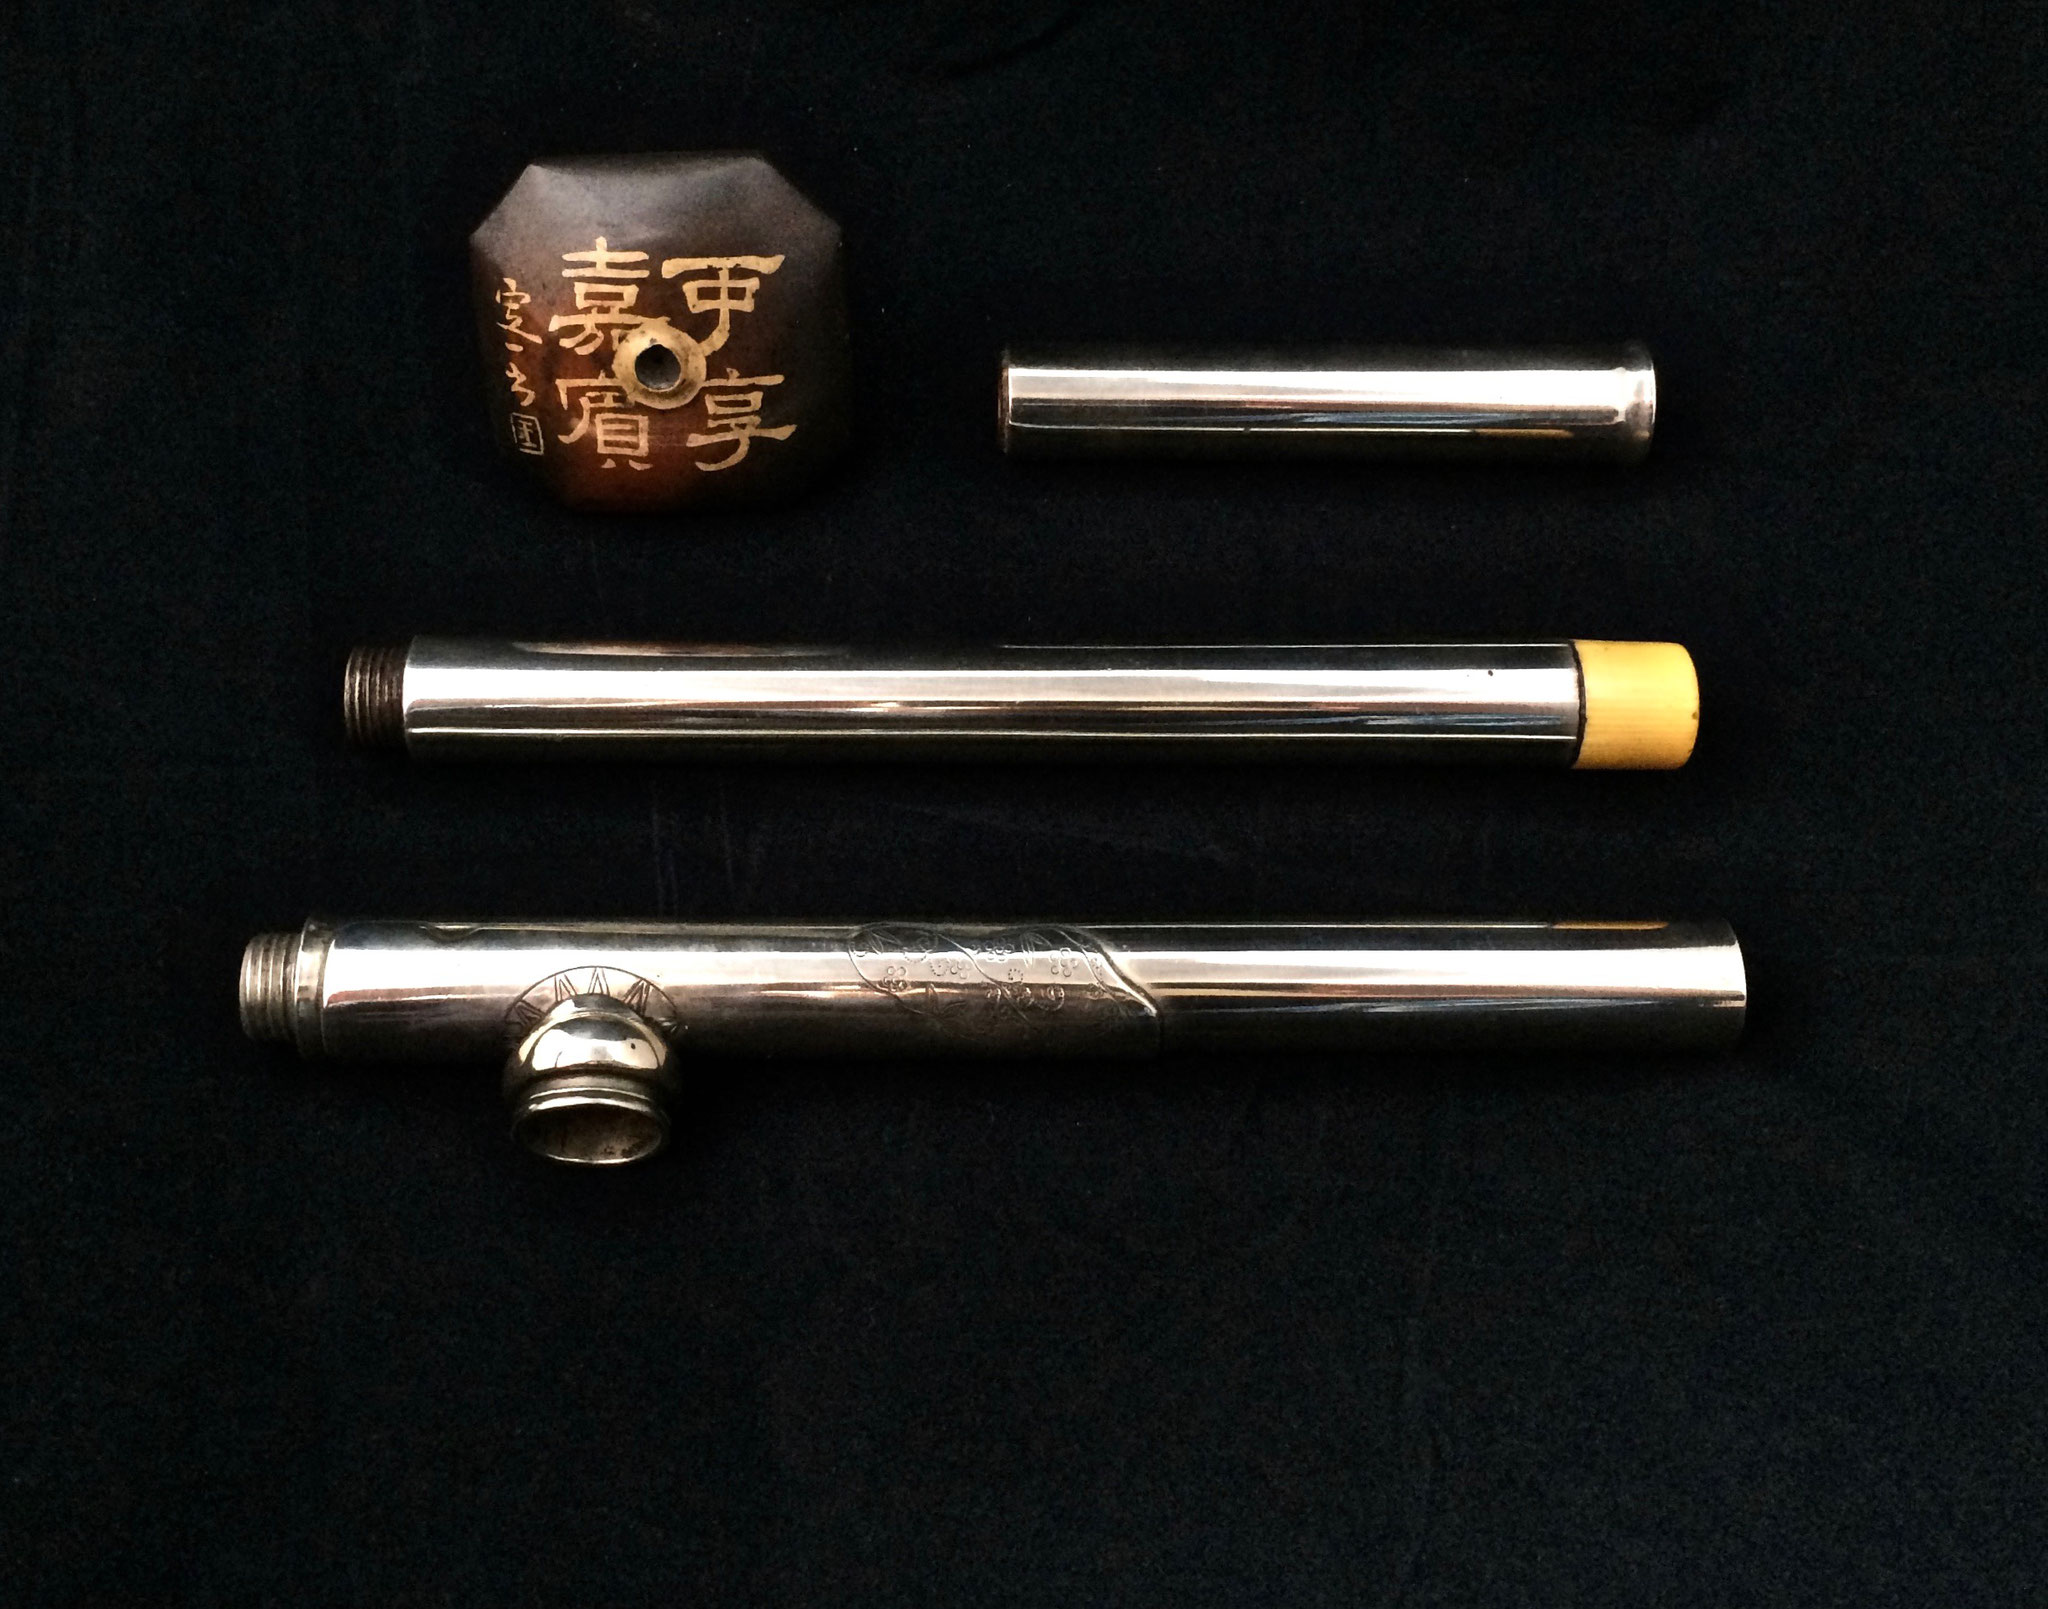 Paktong travel opium pipe (–> Pipes)